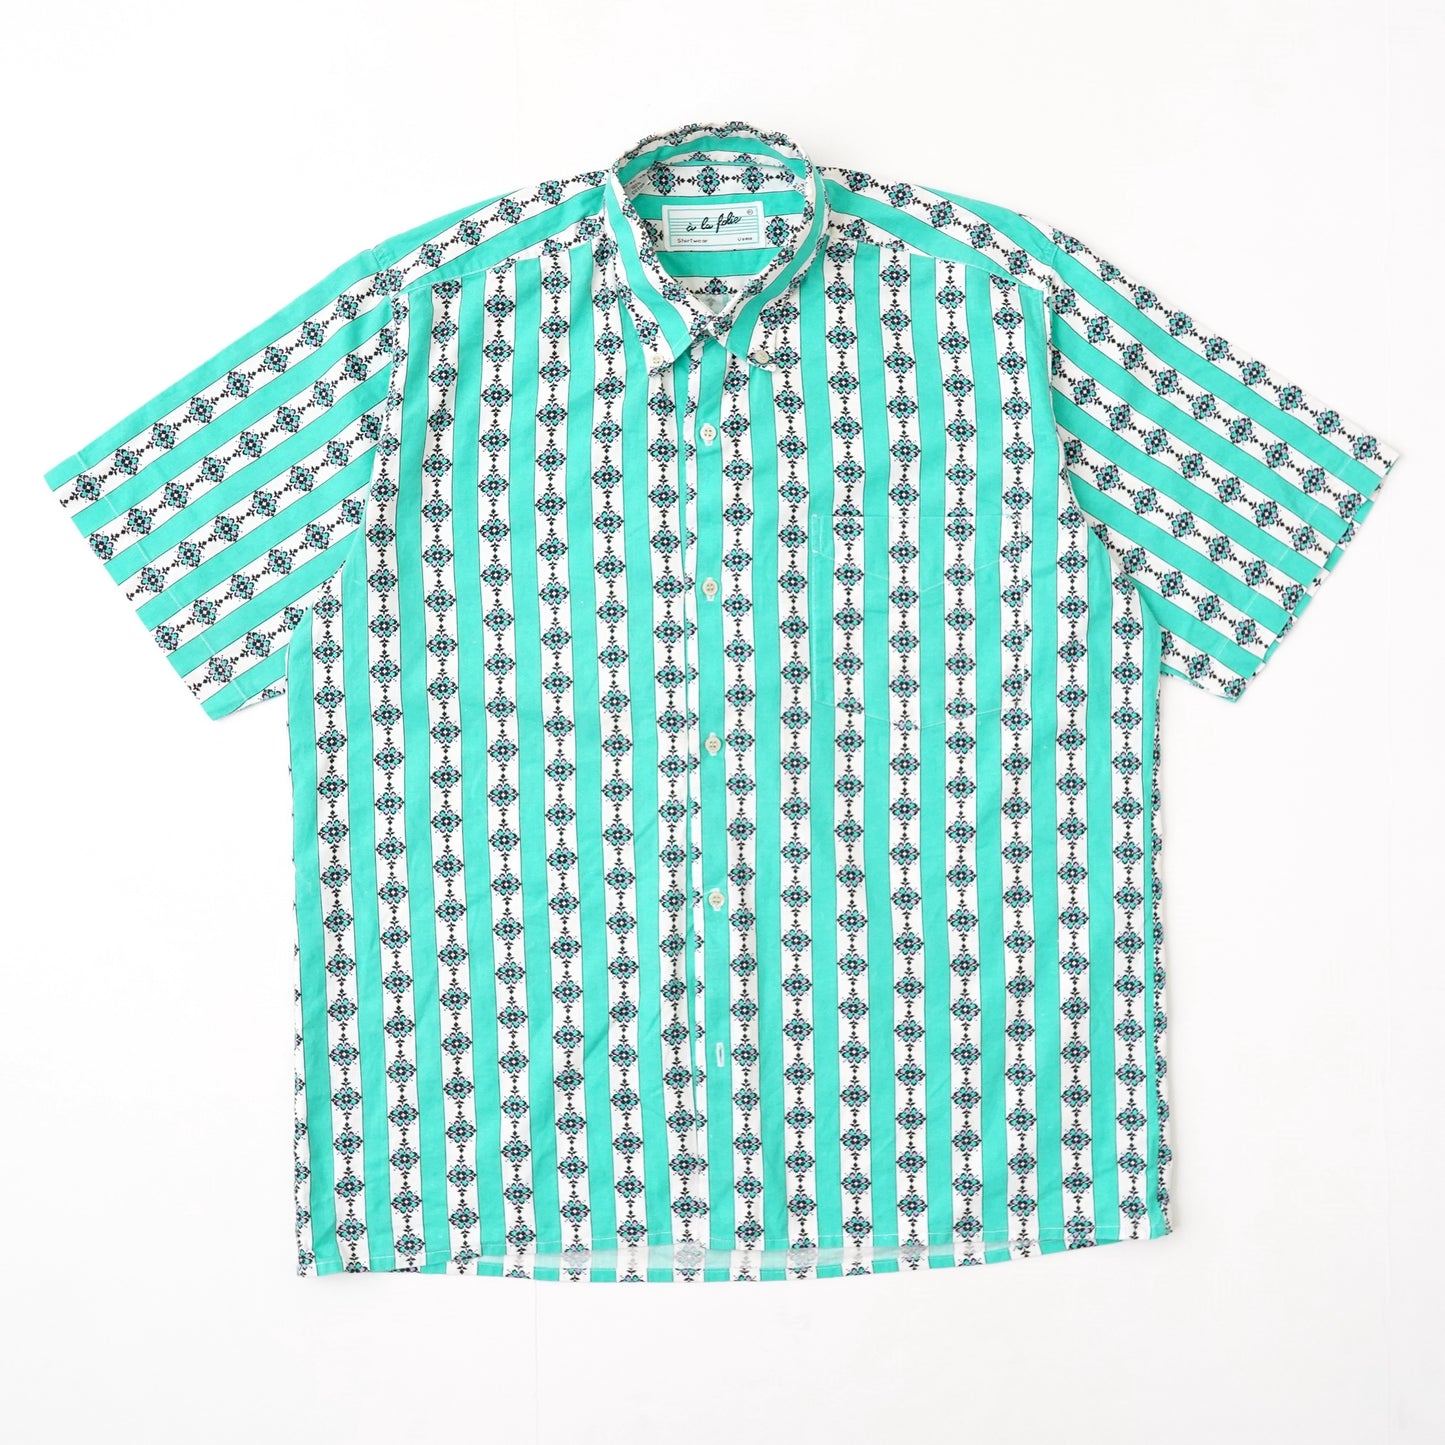 90s Design shirt